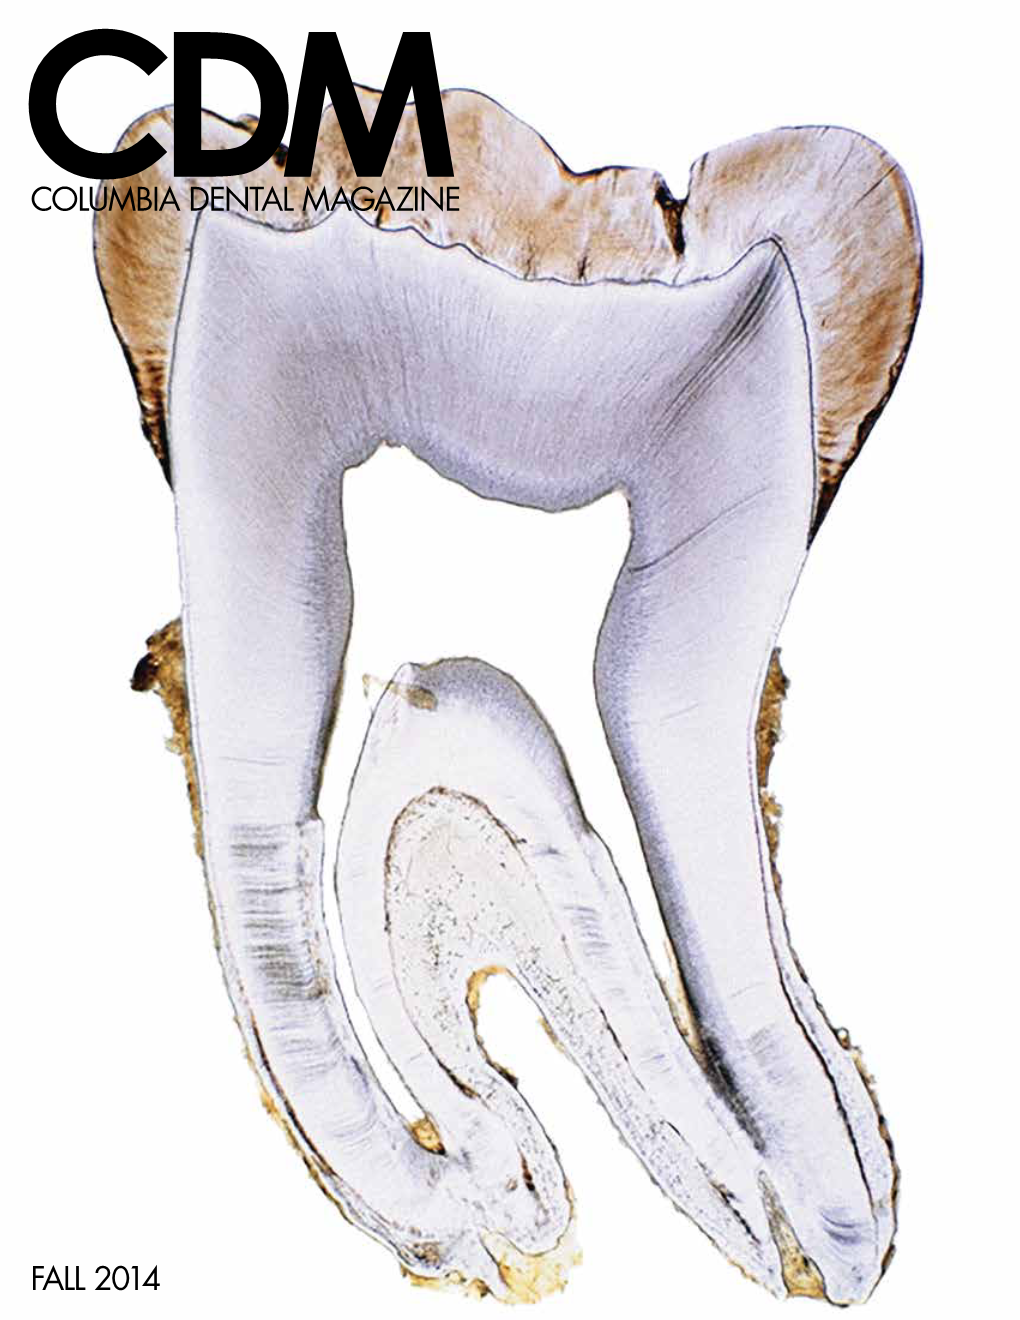 CDM: Columbia Dental Magazine